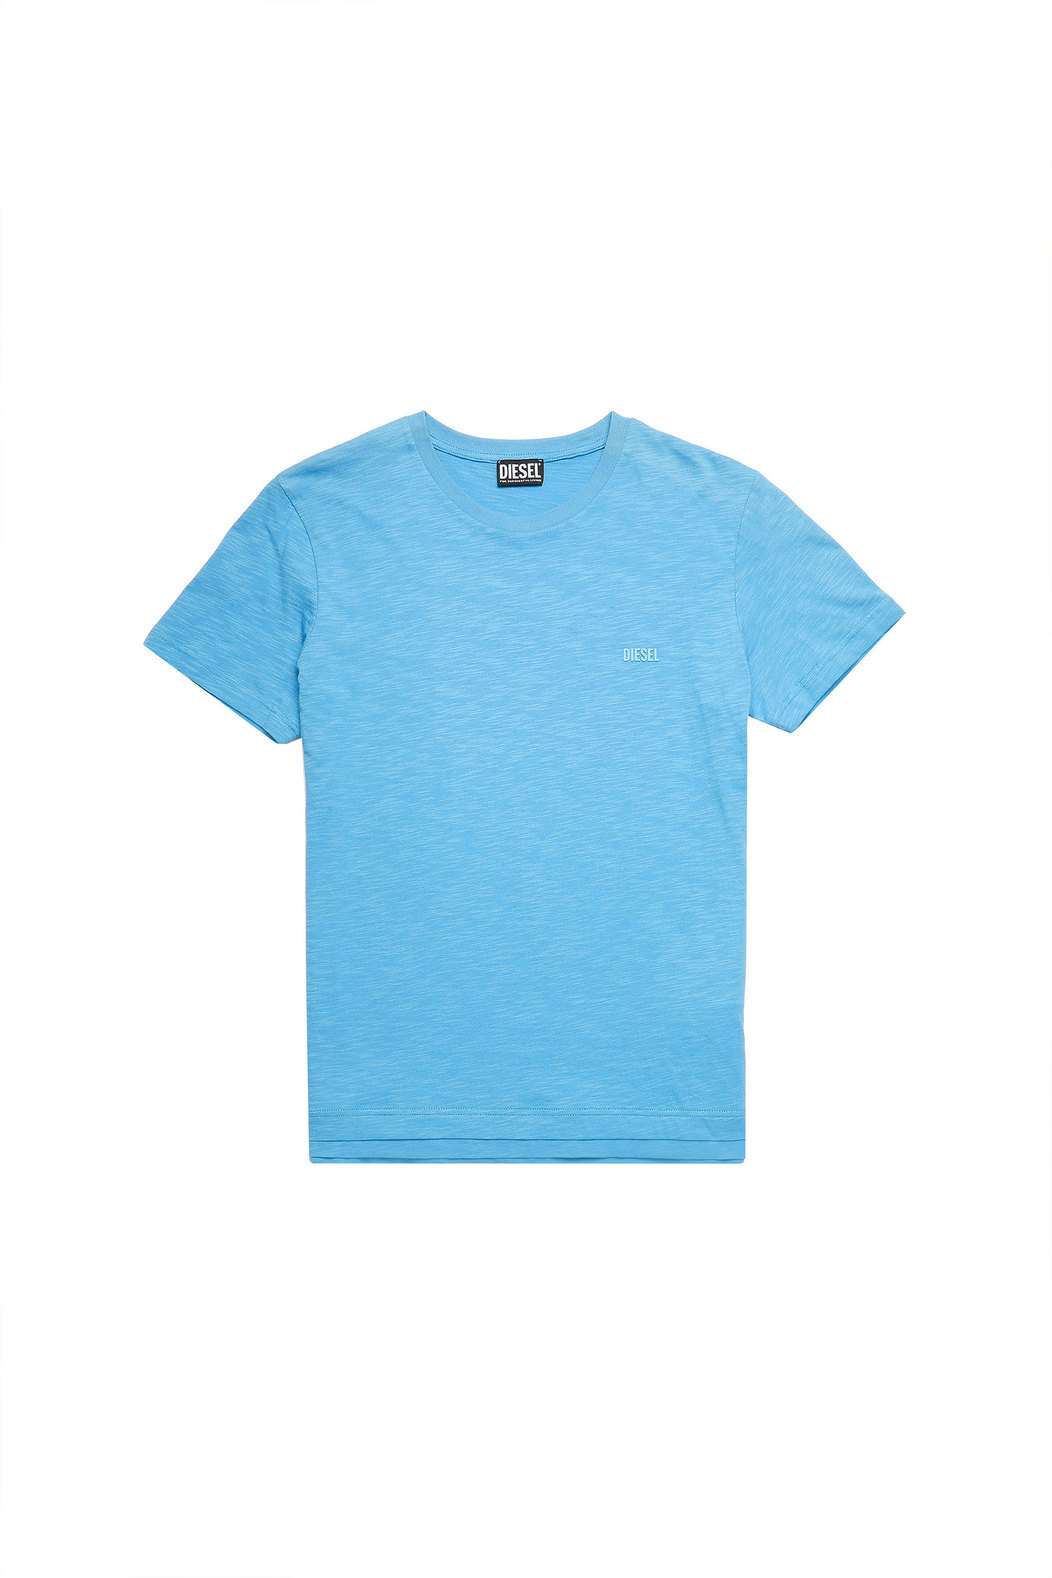 Double-hem T-shirt in slub cotton